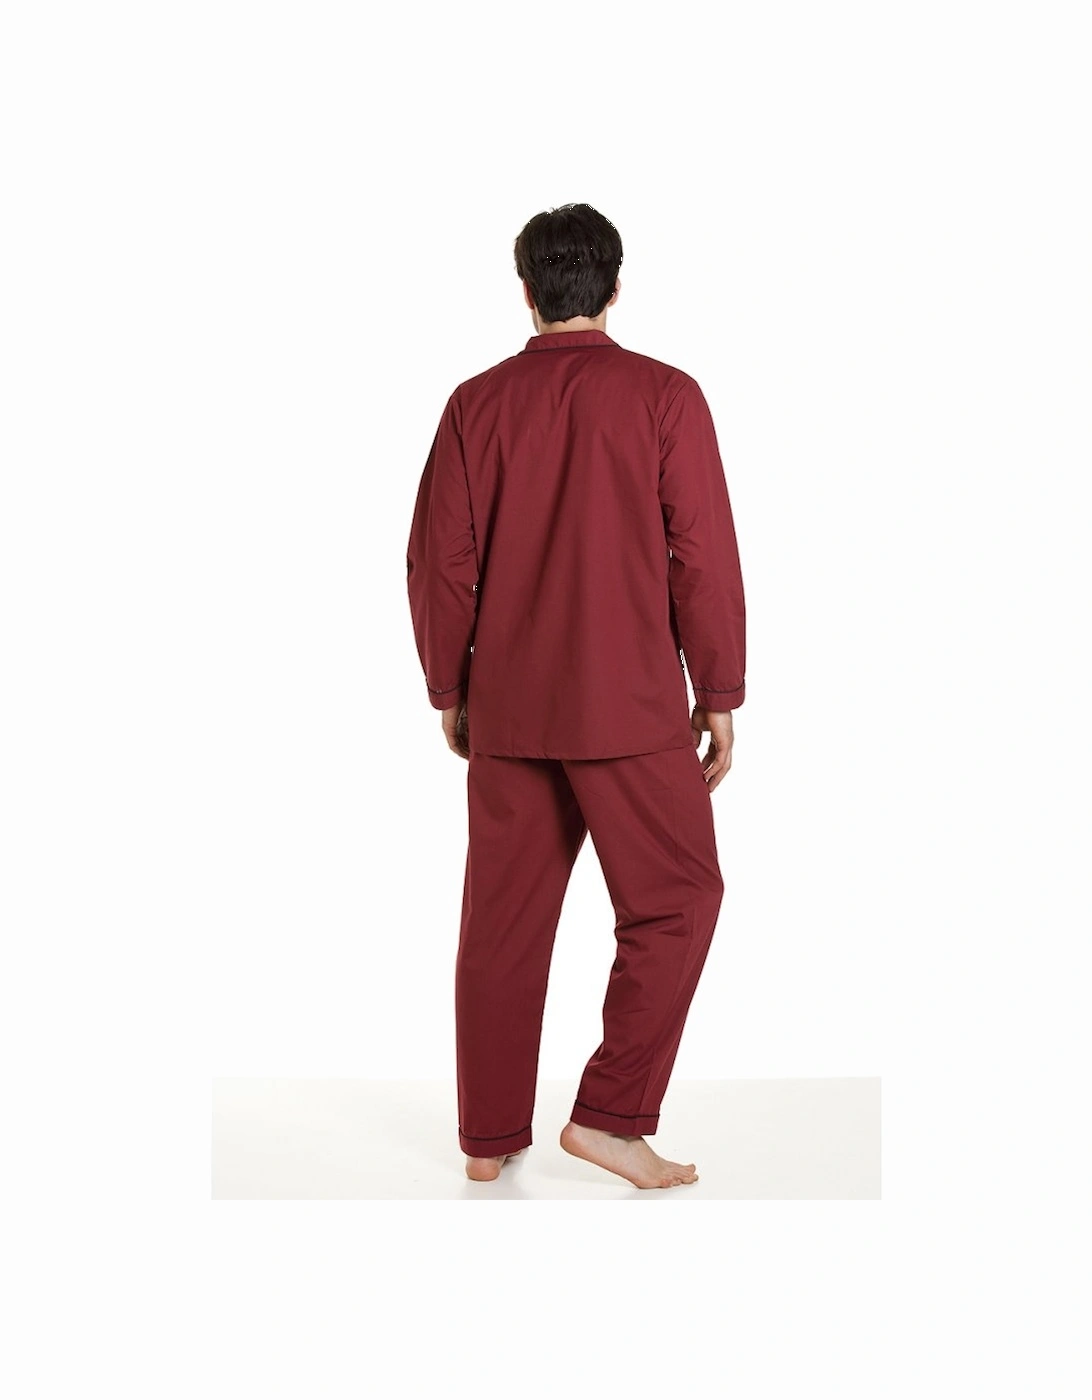 Classic Style Mens Full Length Burgundy Red Pyjama Set